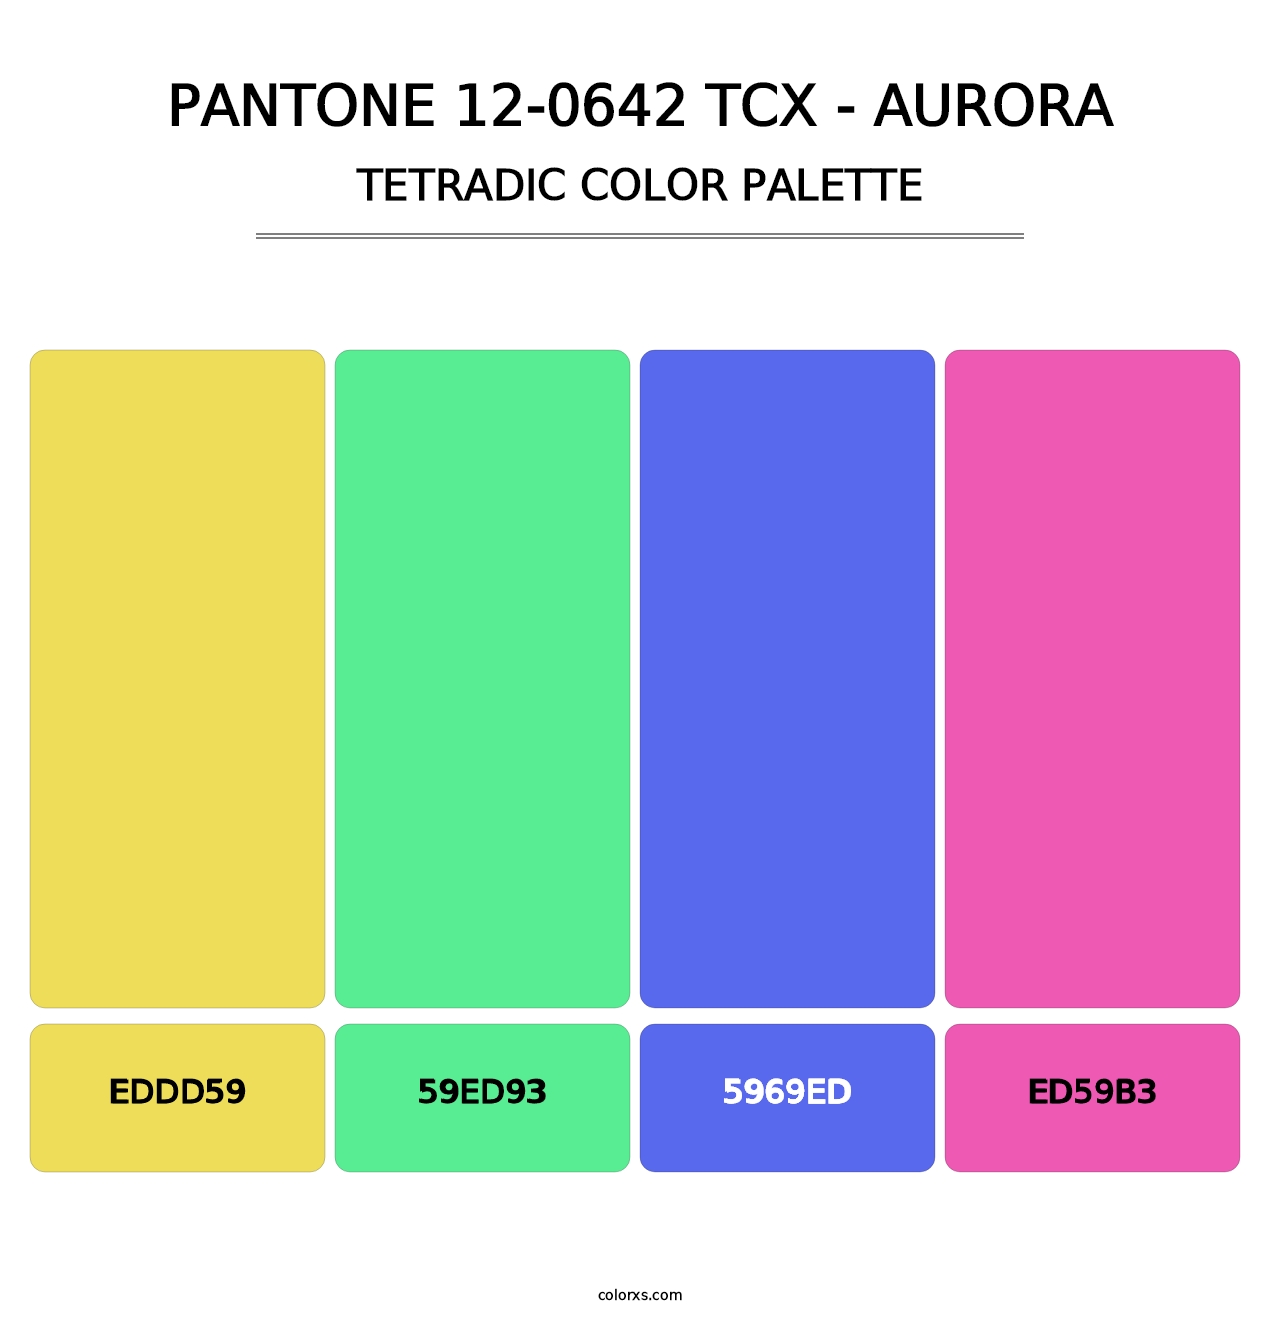 PANTONE 12-0642 TCX - Aurora - Tetradic Color Palette